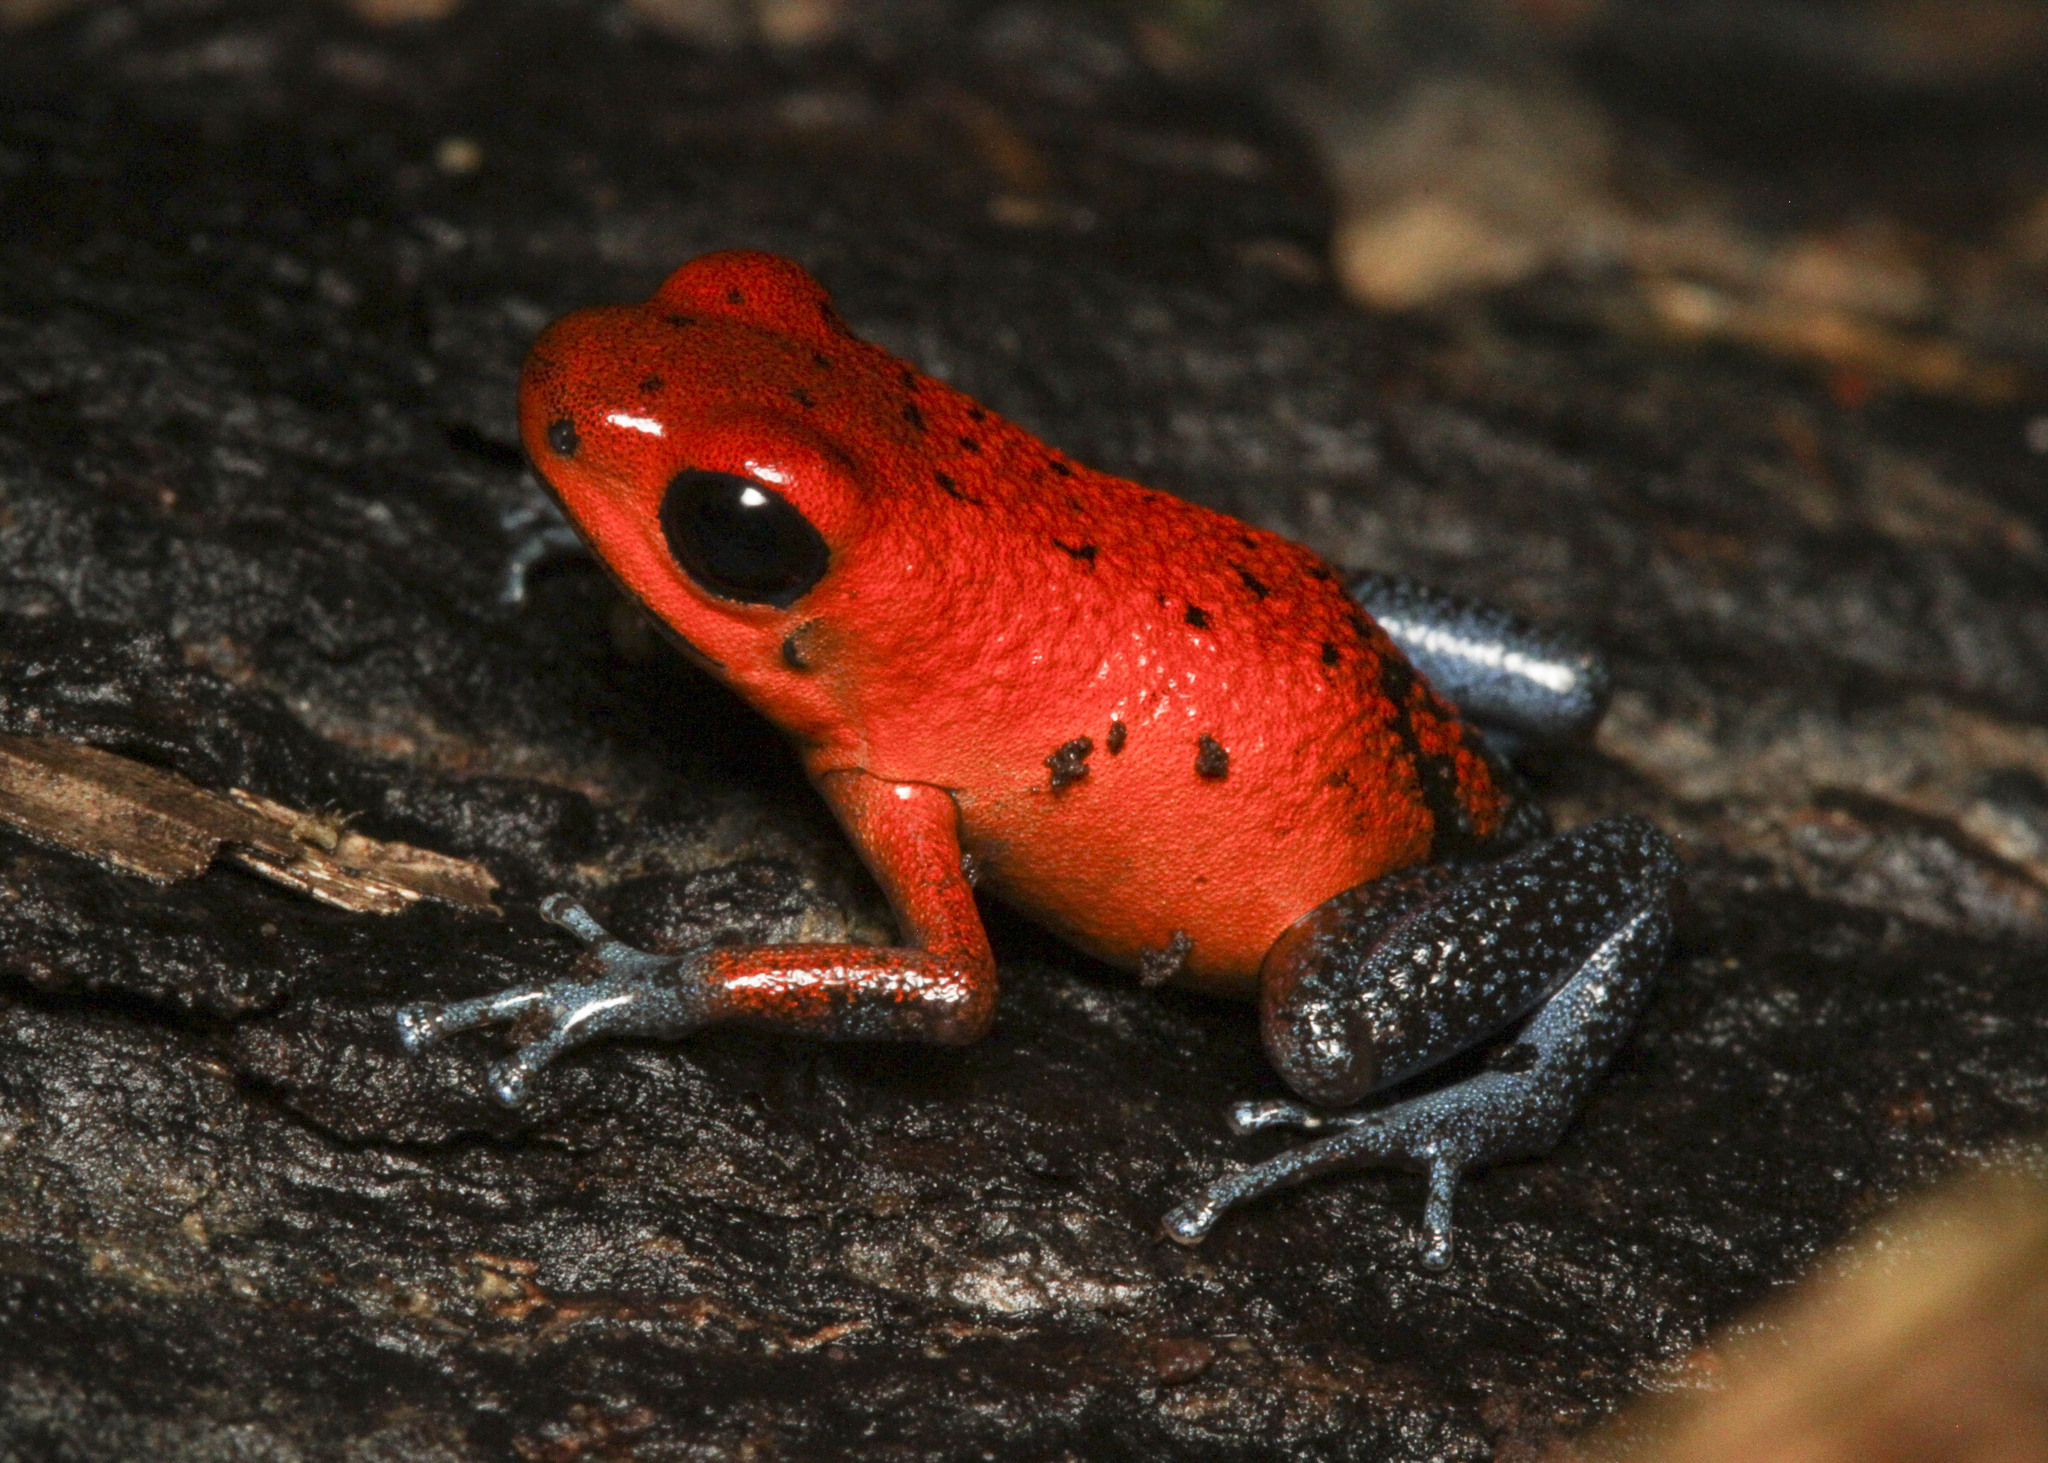 Strawberry poison-dart frog - Wikipedia